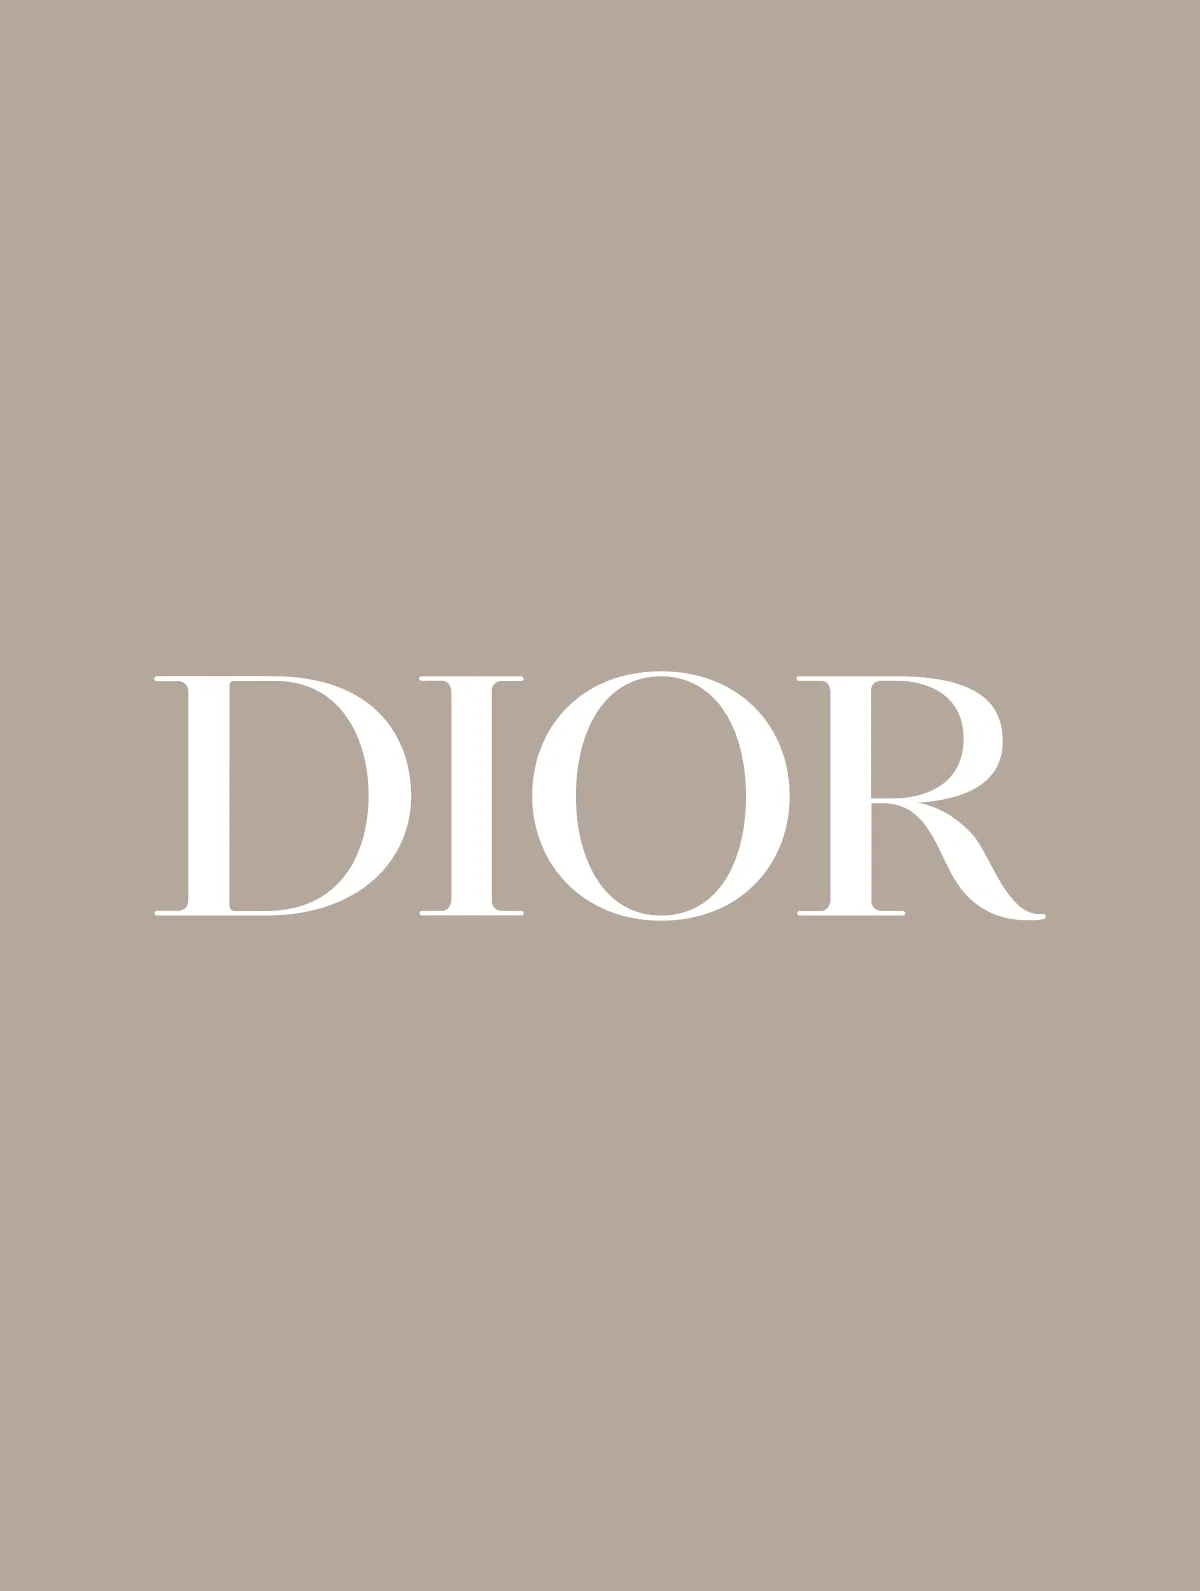 Hangar Design Group - Dior